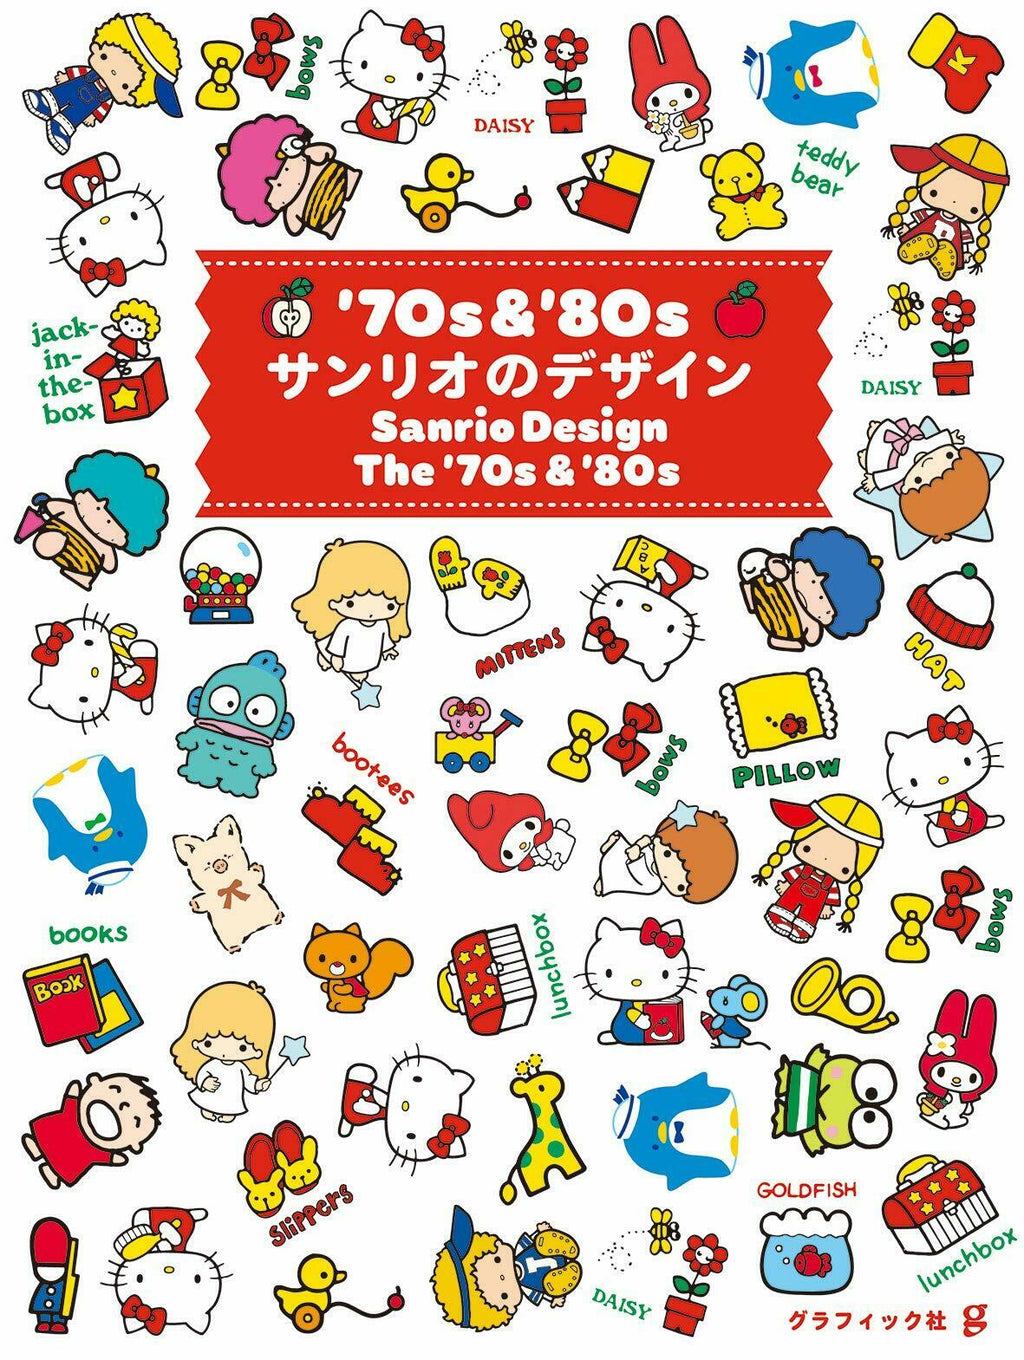 NEW' Sanrio Design The 70s & 80s | JAPAN Art Book Hello Kitty Little Twin Stars